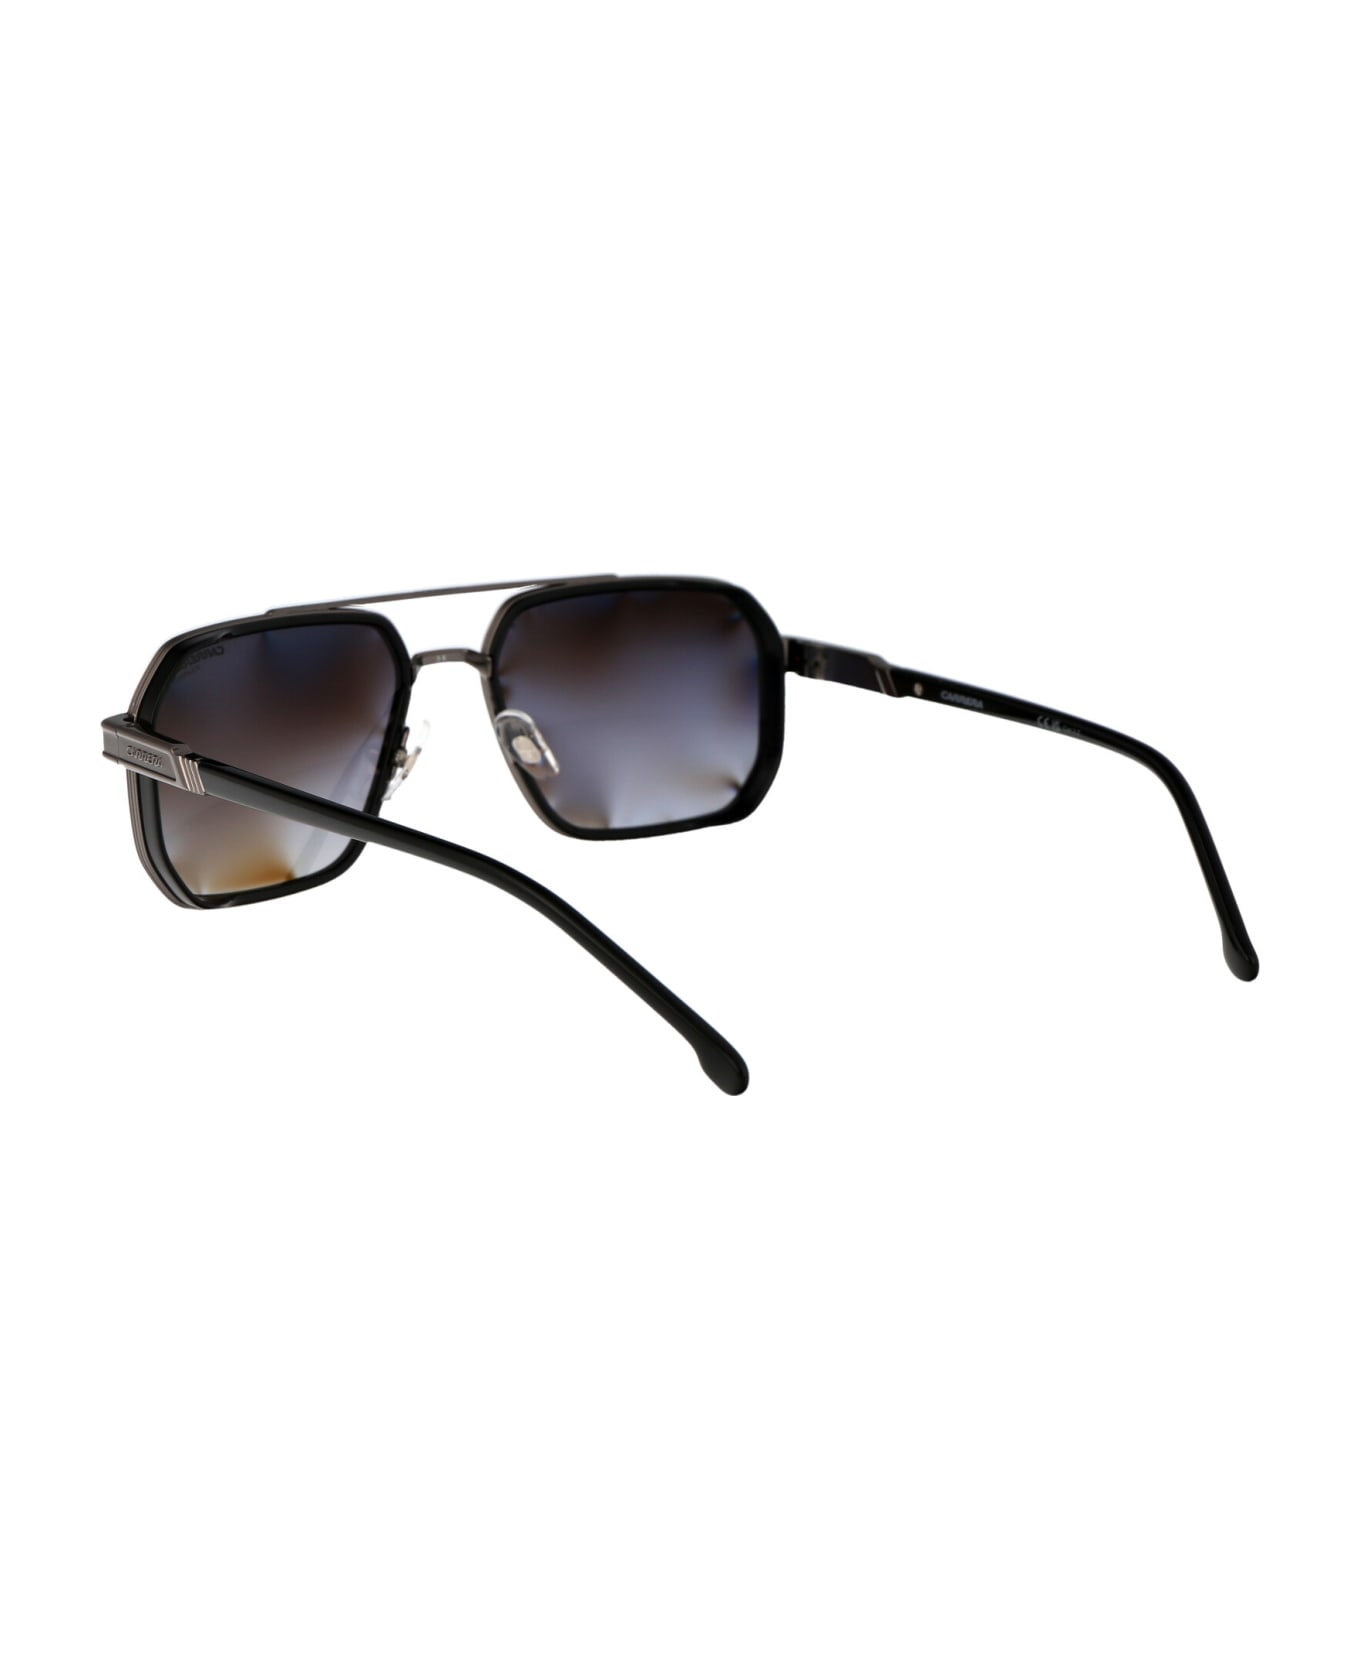 Carrera 1069/s Sunglasses - ANSWJ BLK DKRUT サングラス